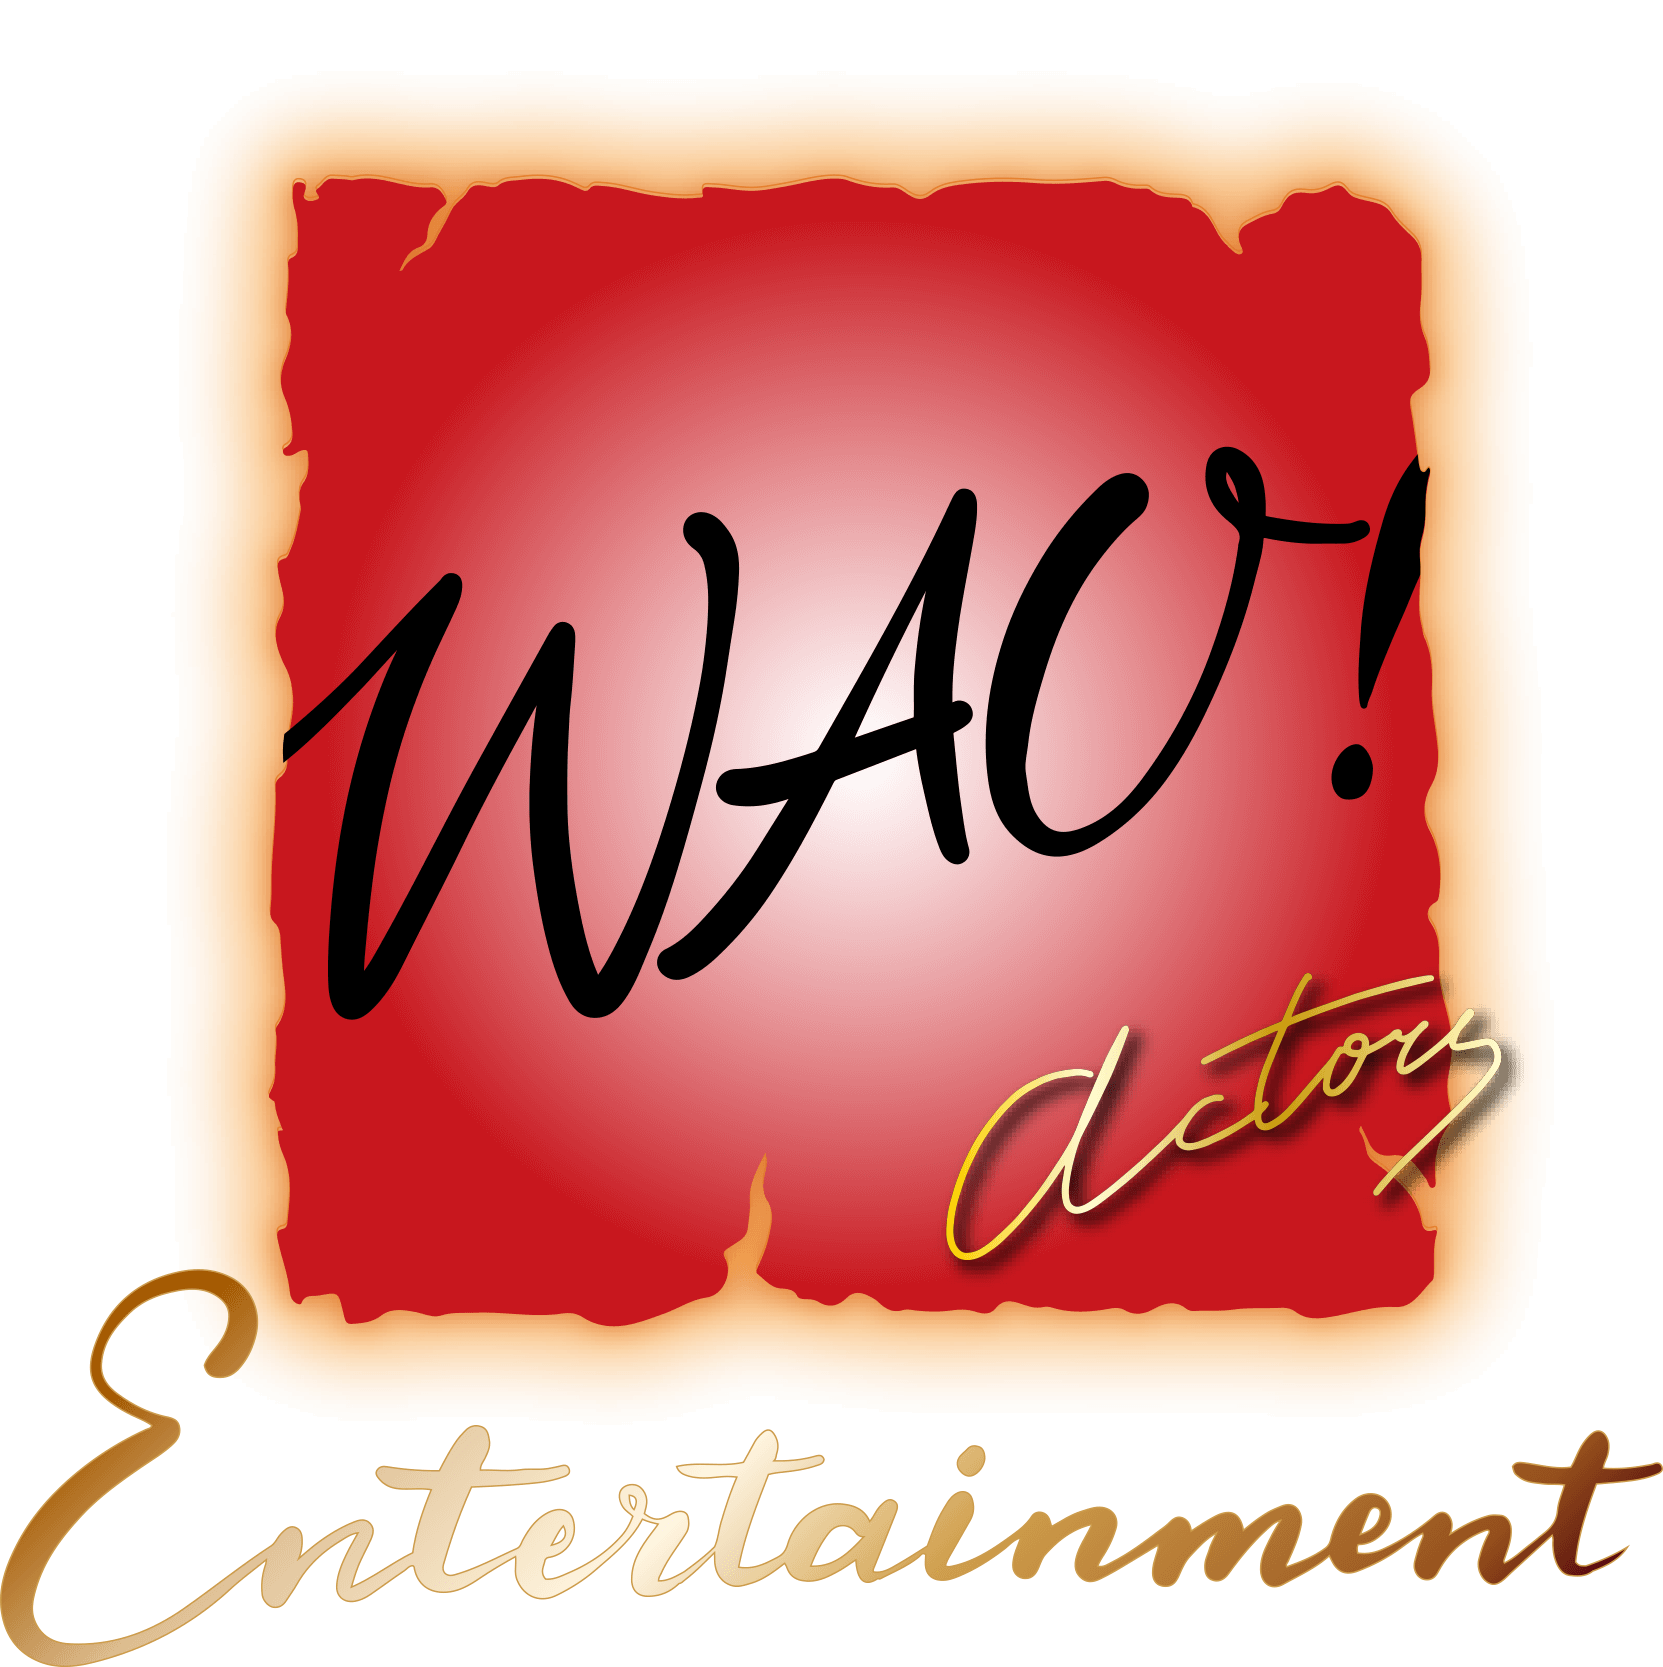 WAO!enter actorsロゴ